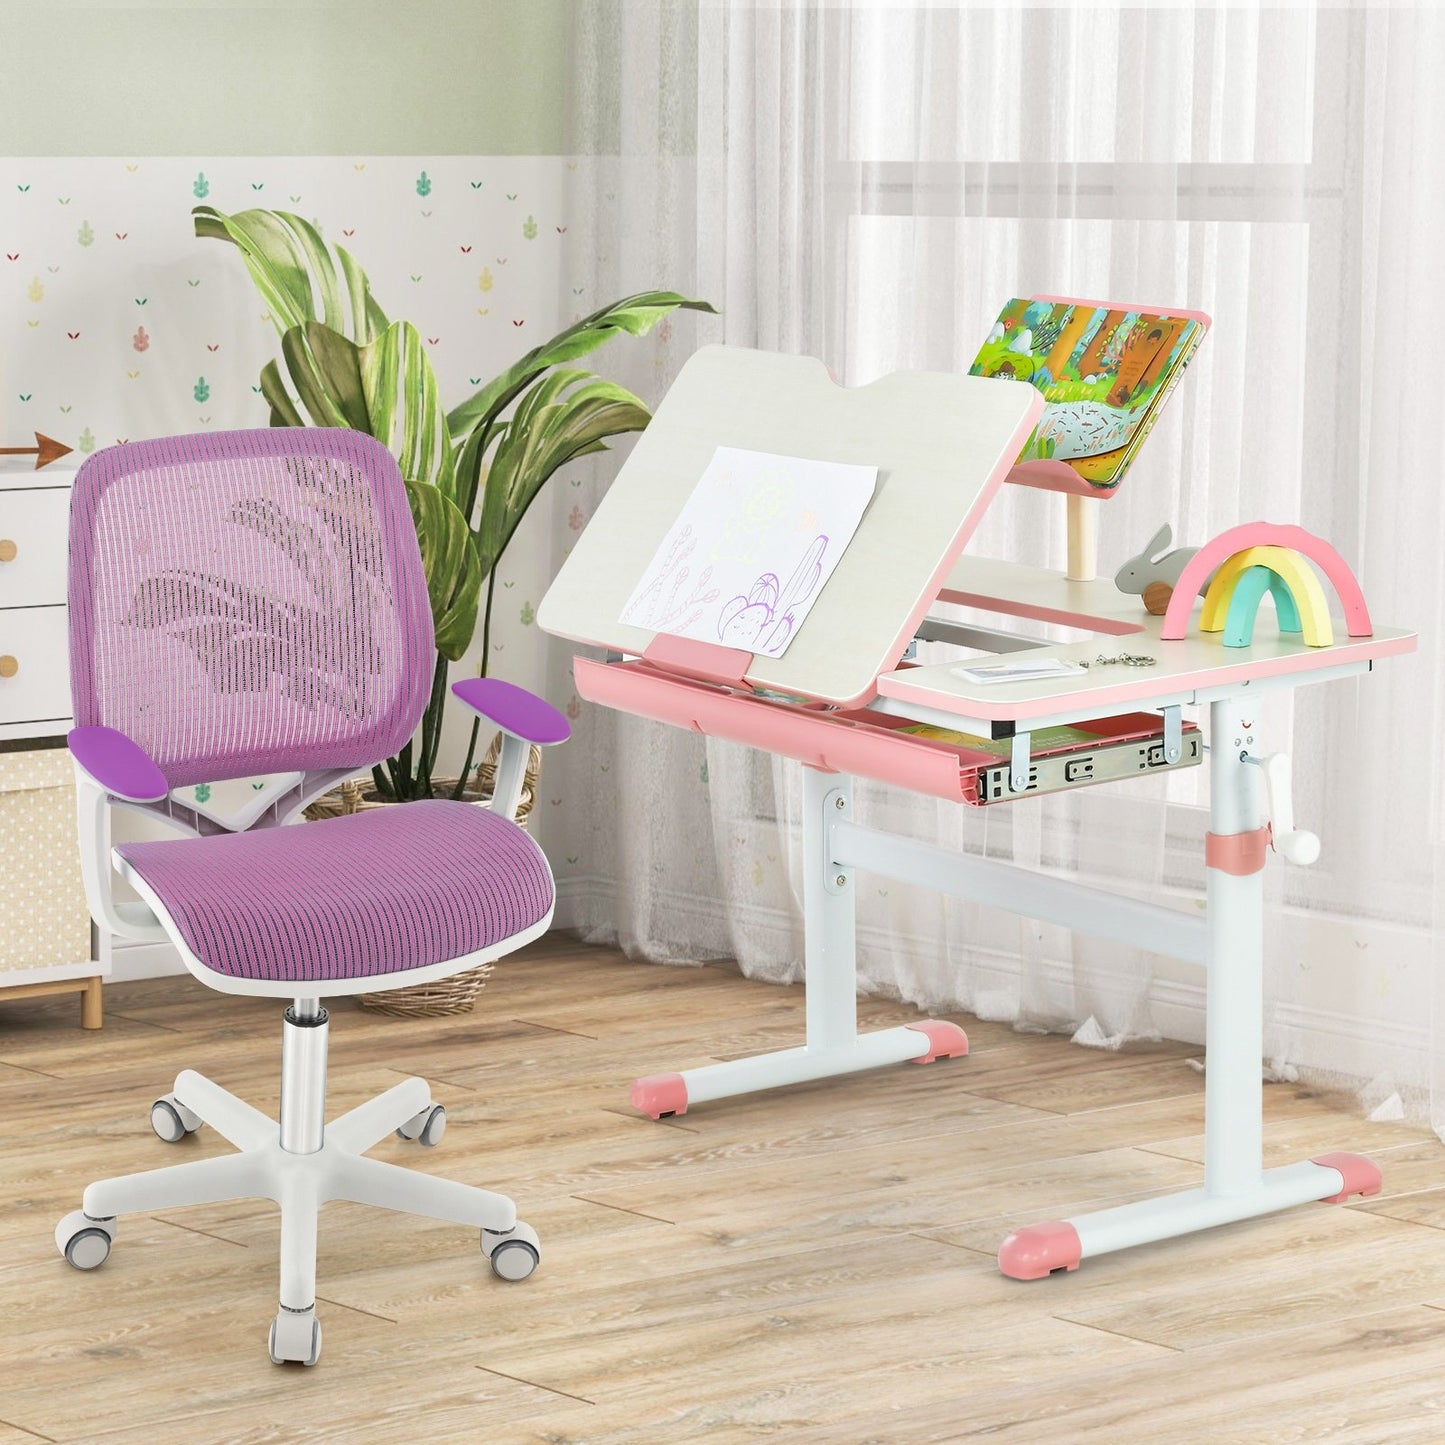 Swivel Mesh Children Computer Chair with Adjustable Height, Purple